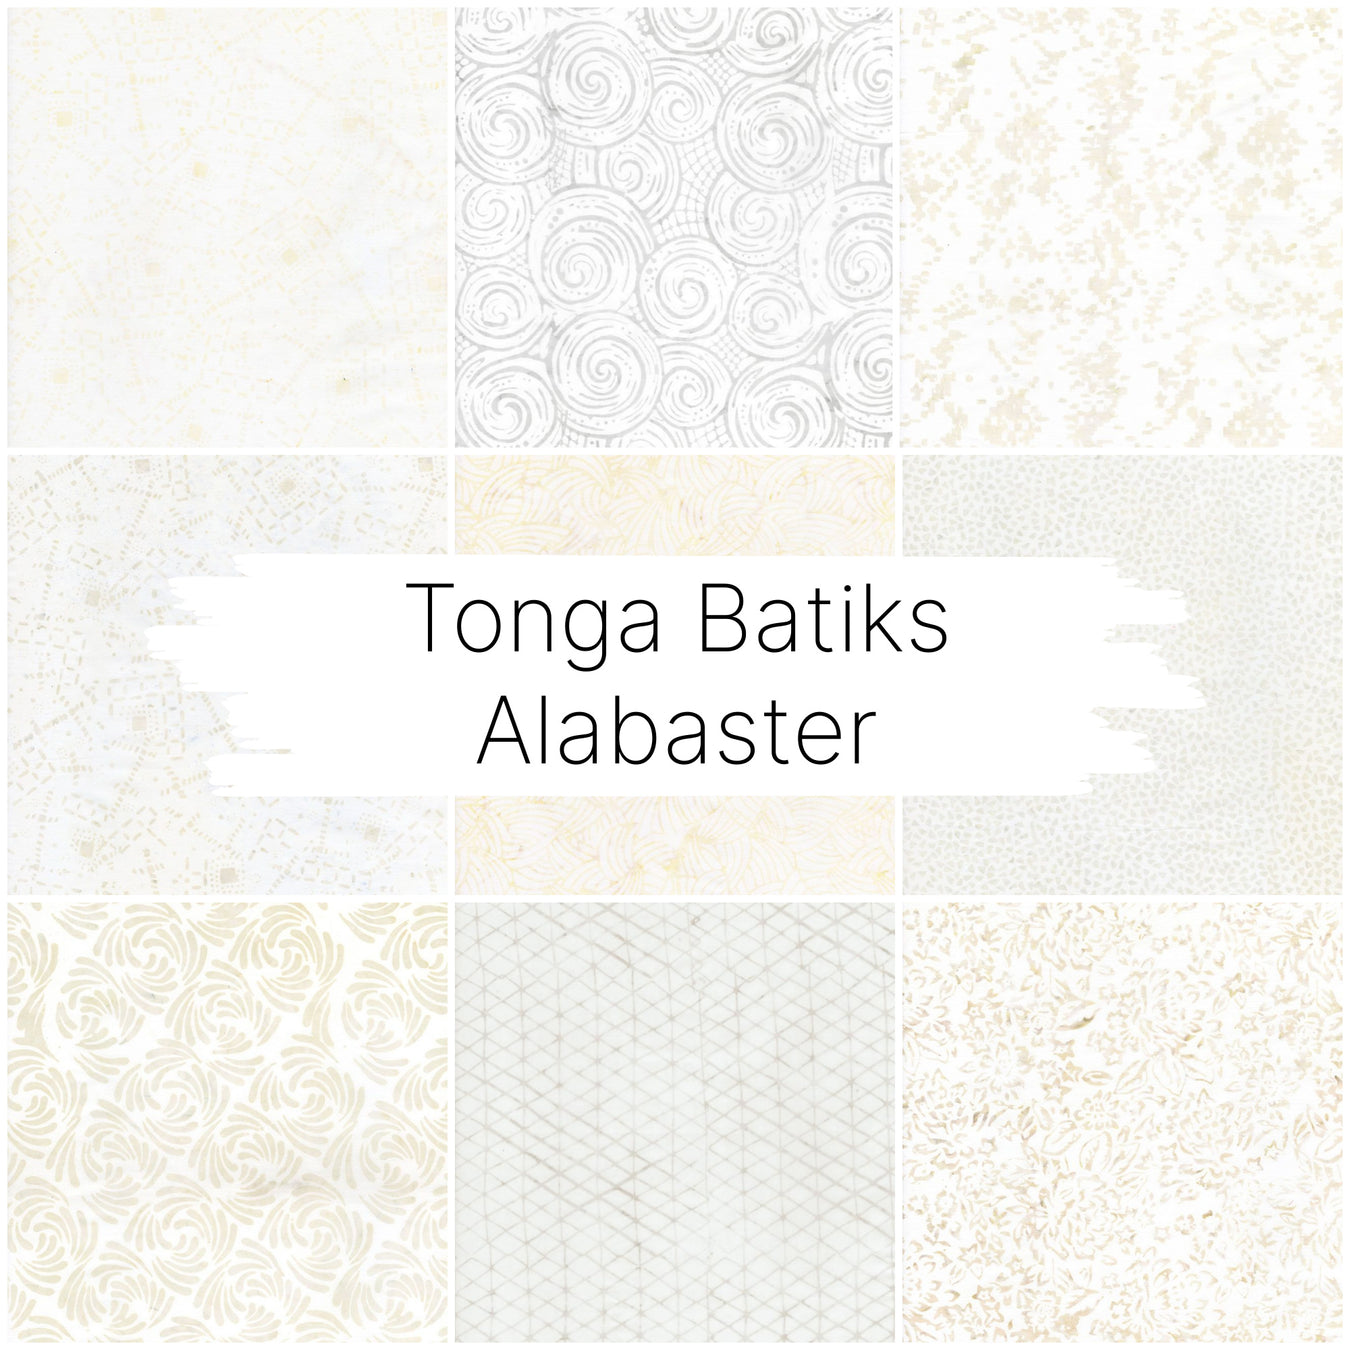 Tonga Batiks Alabaster